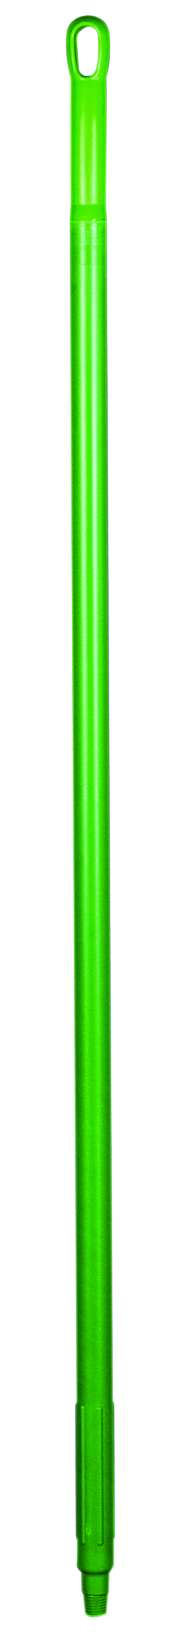 Рукоятка полипропиленовая Hill Brush 1400 мм, зеленая